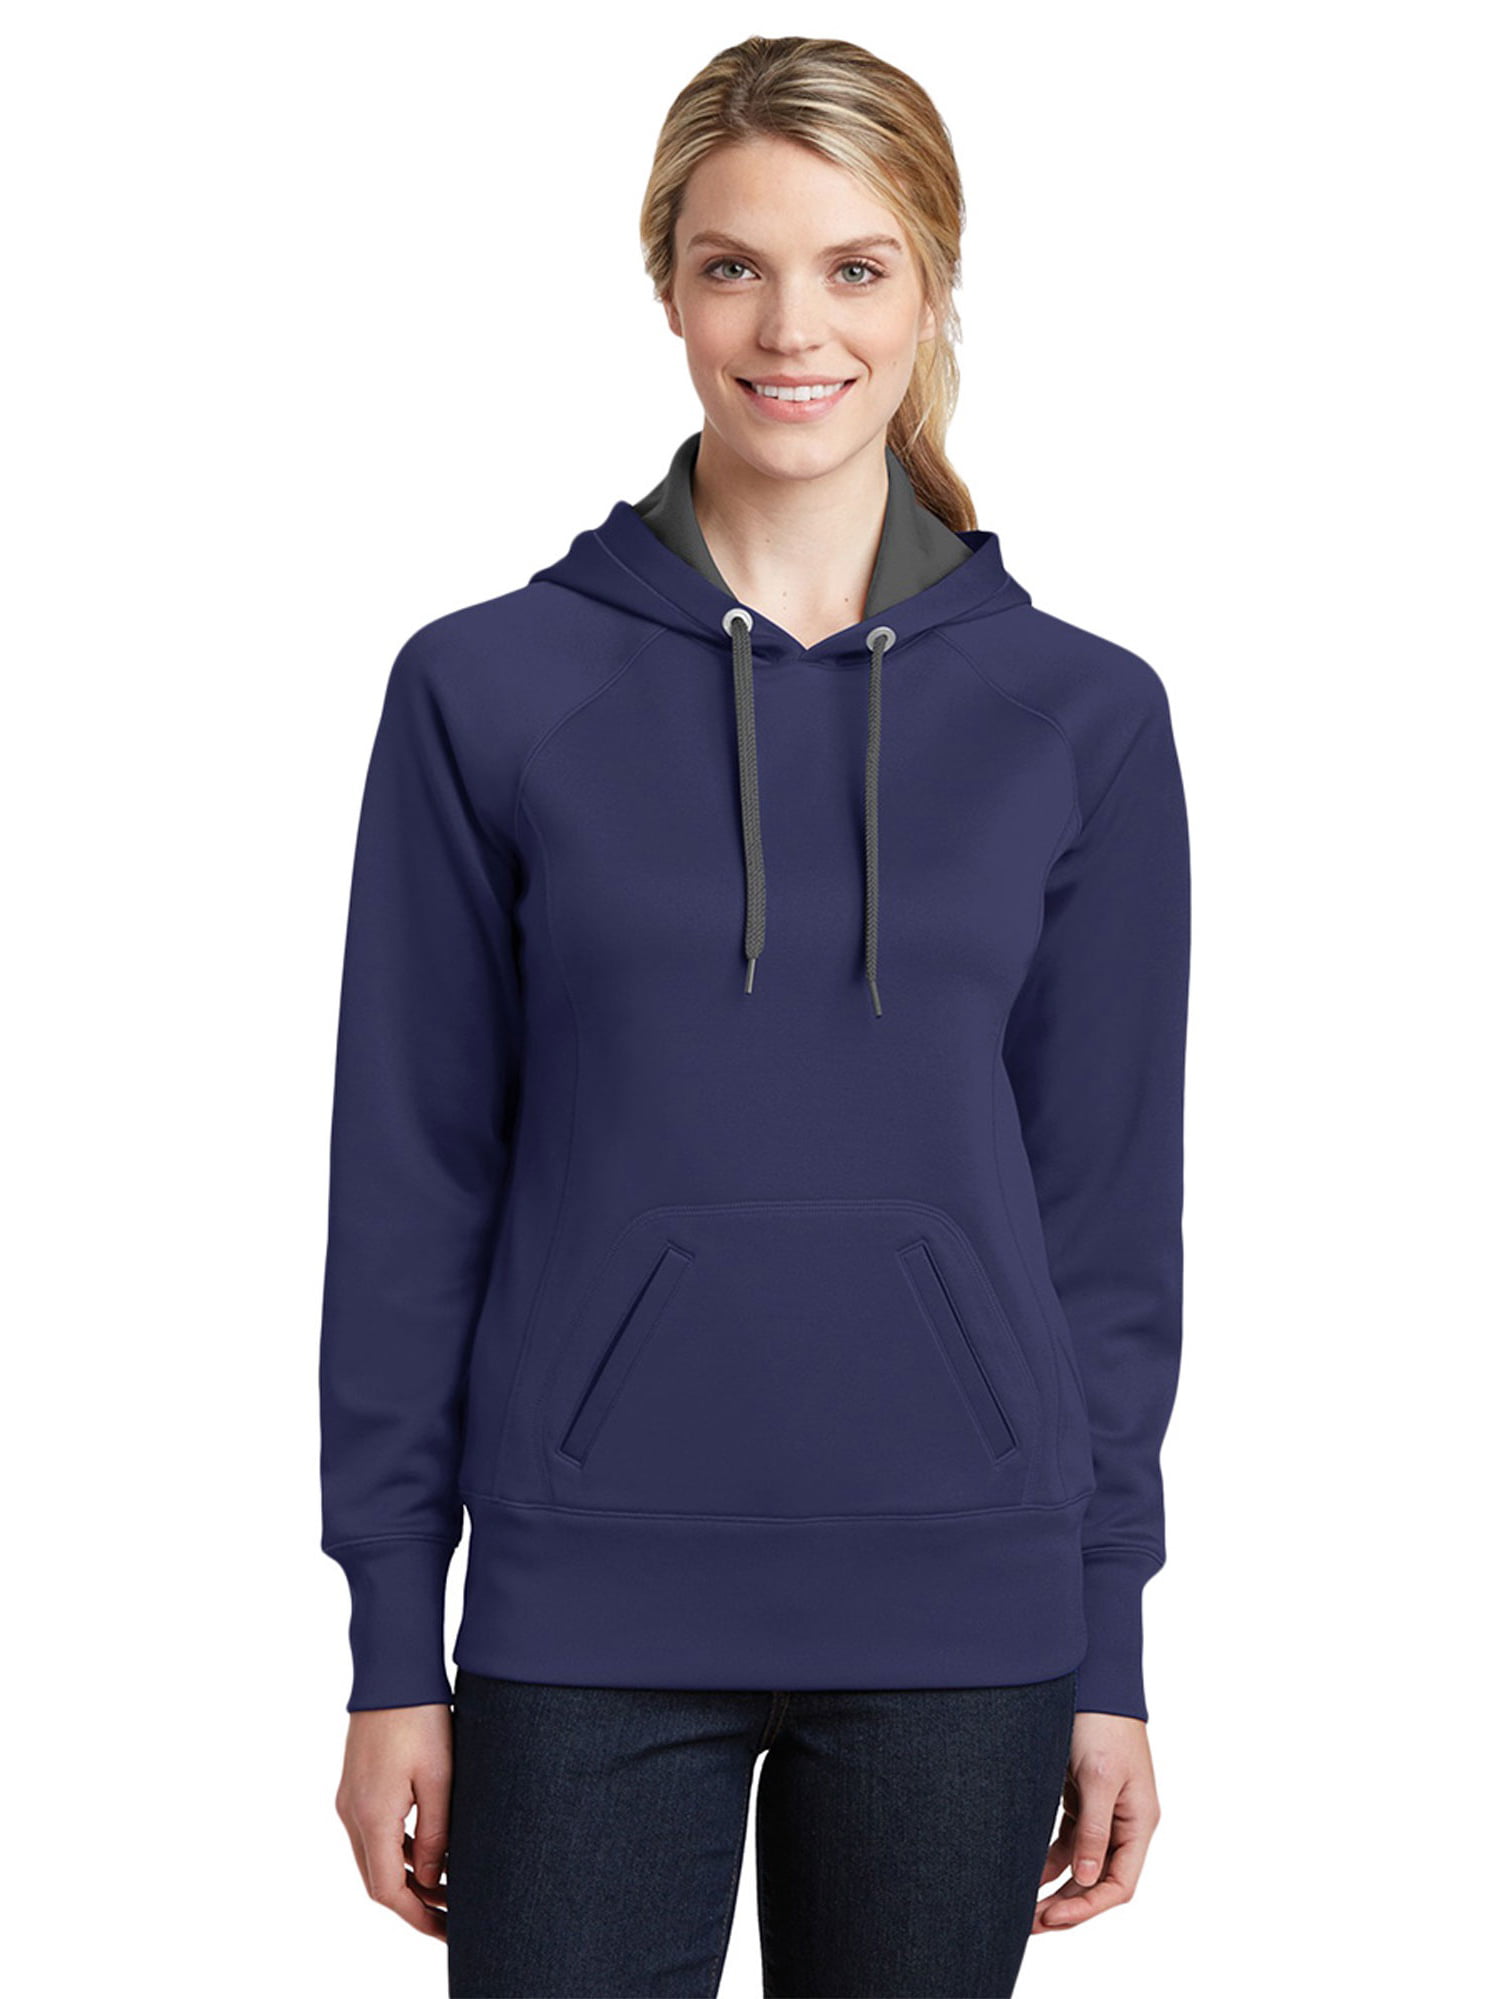 Sport-Tek - Sport-Tek Women's Fleece Hooded Sweatshirt - Walmart.com ...